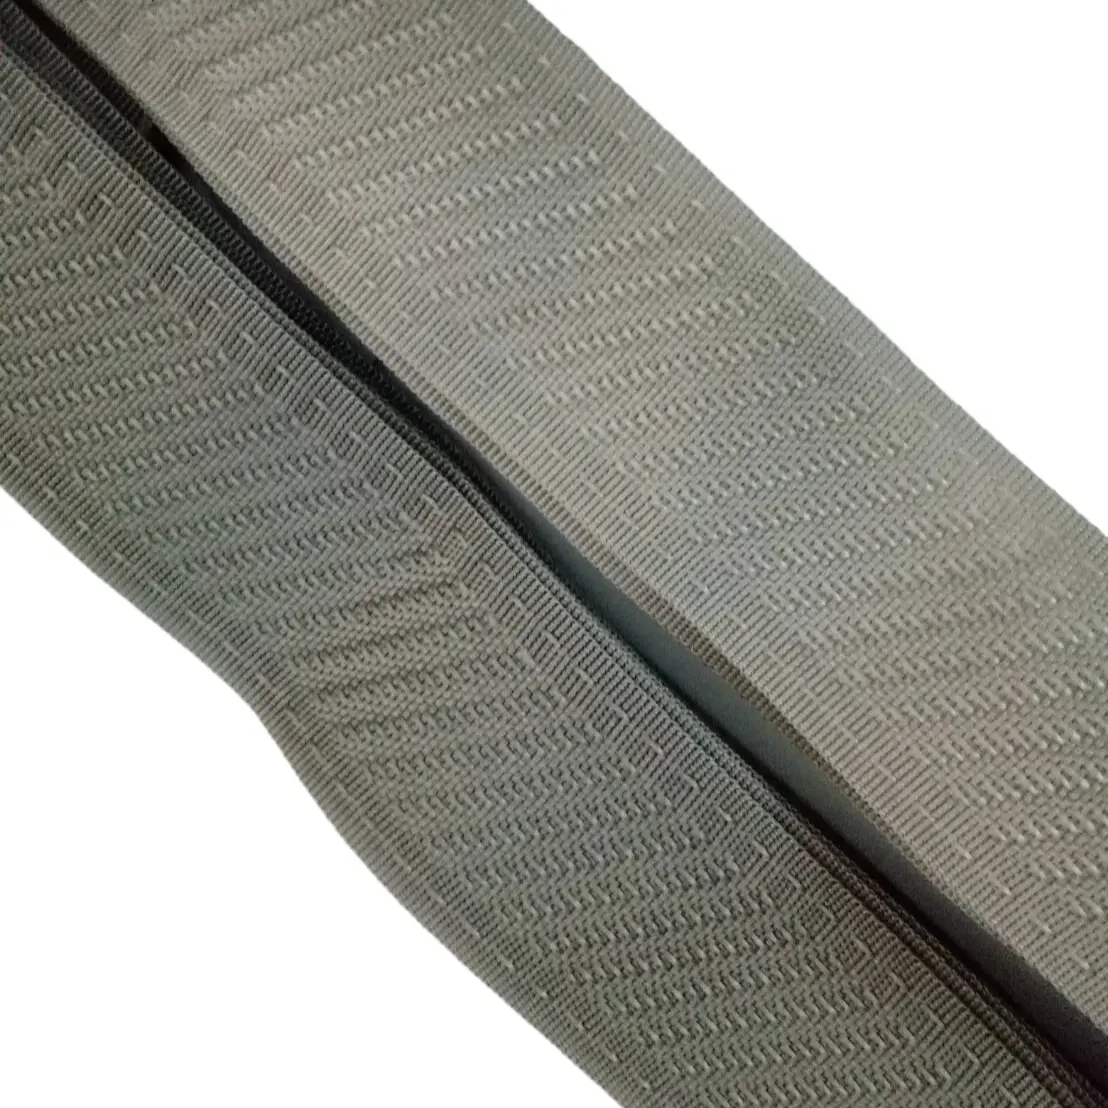 Band Kantenband Band Polyester Polypropylen Breite 10 mm Bis zu 60 mm benutzerdefiniertes Design Band Matratze Band Kantenband